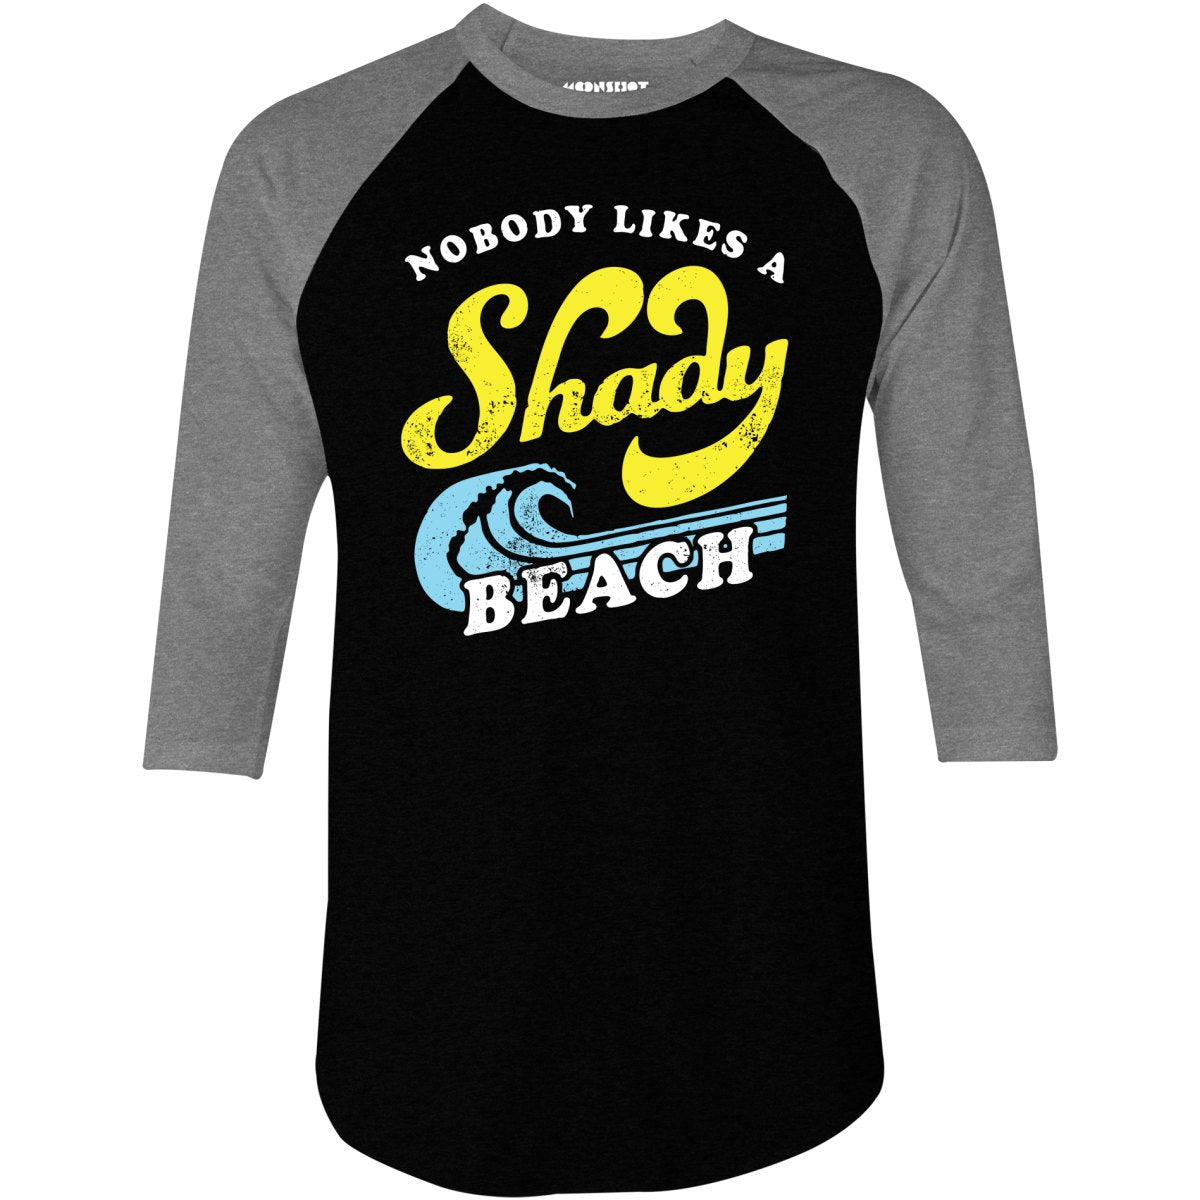 Nobody Likes a Shady Beach - 3/4 Sleeve Raglan T-Shirt